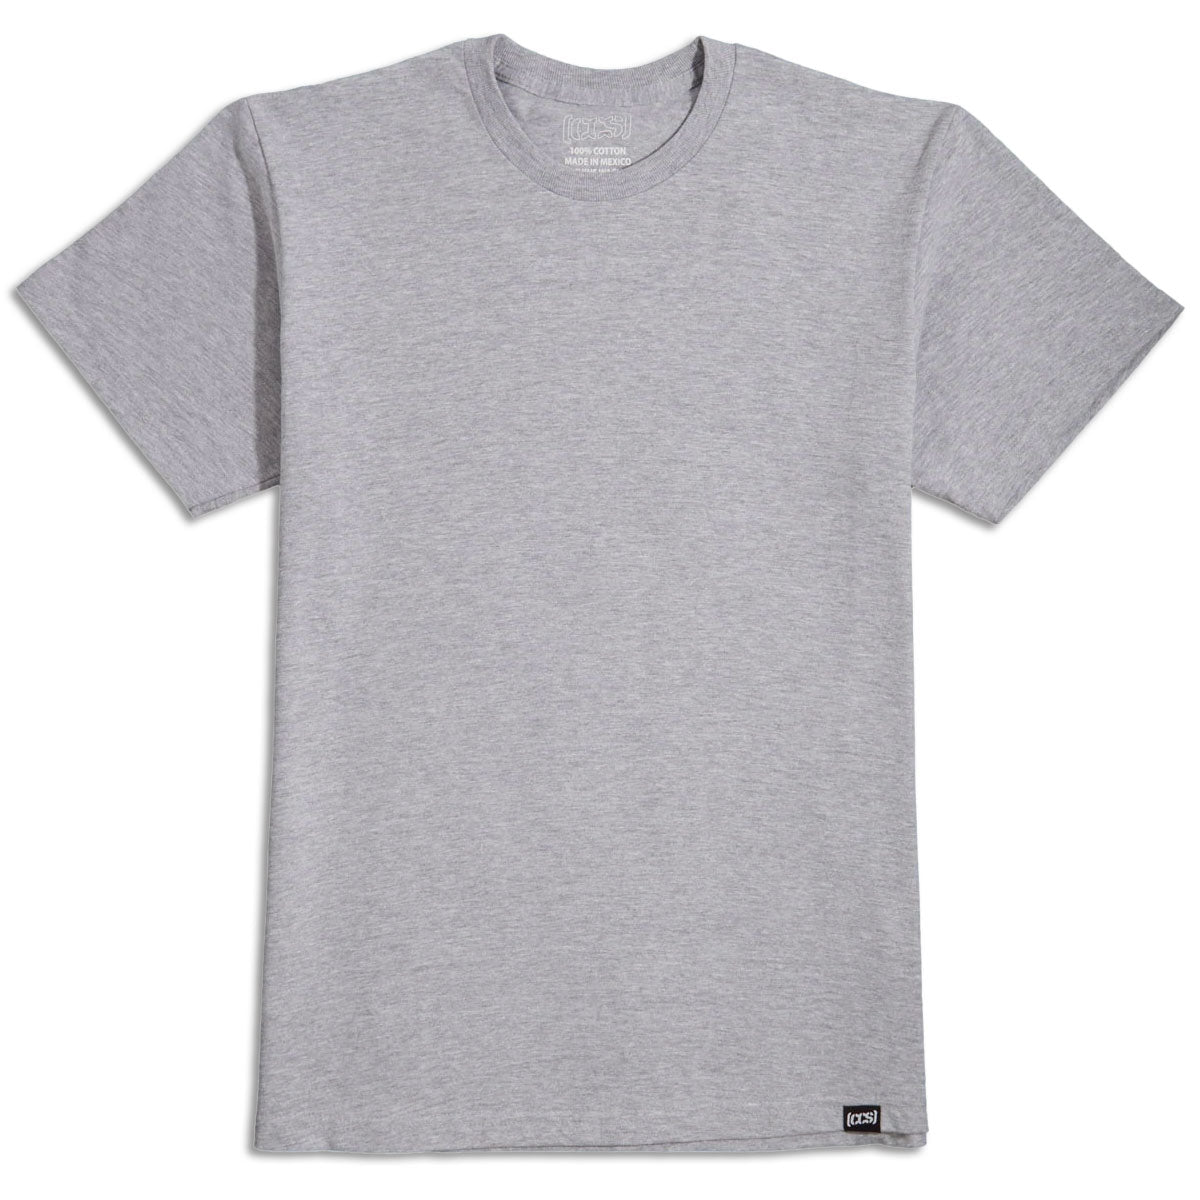 CCS Original Heavyweight T-Shirt - Grey image 1